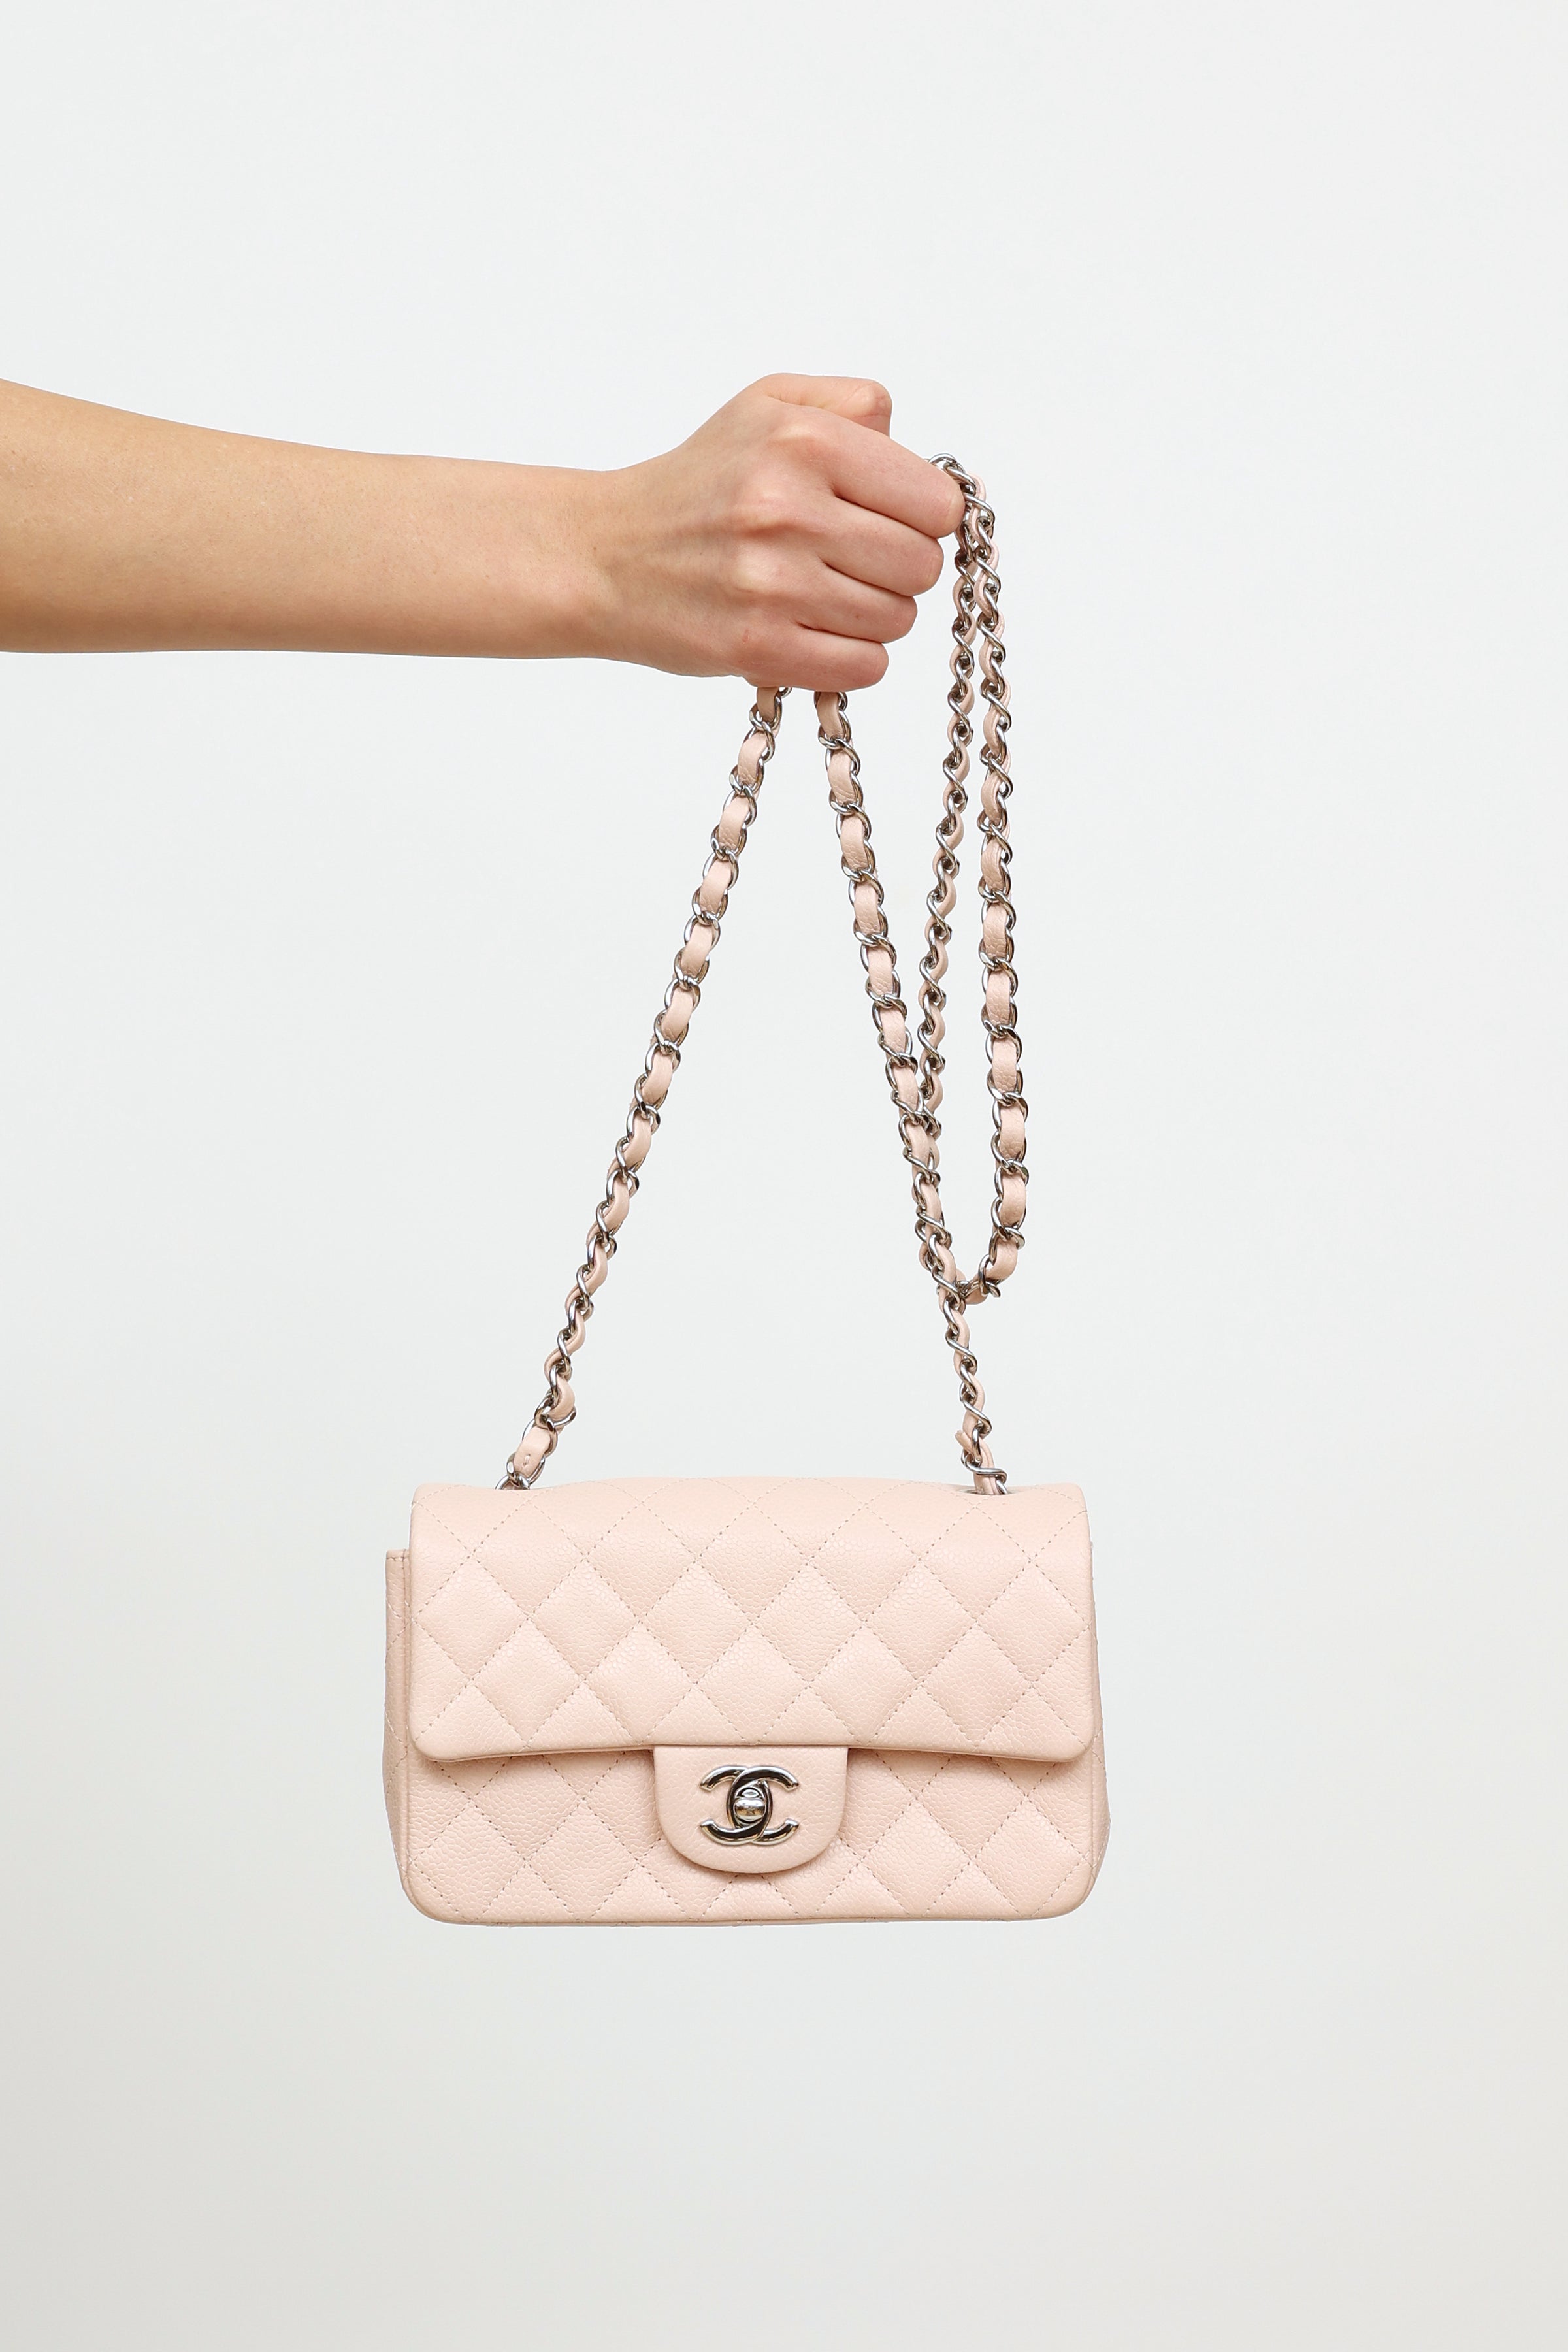 chanel mini flap bag light pink